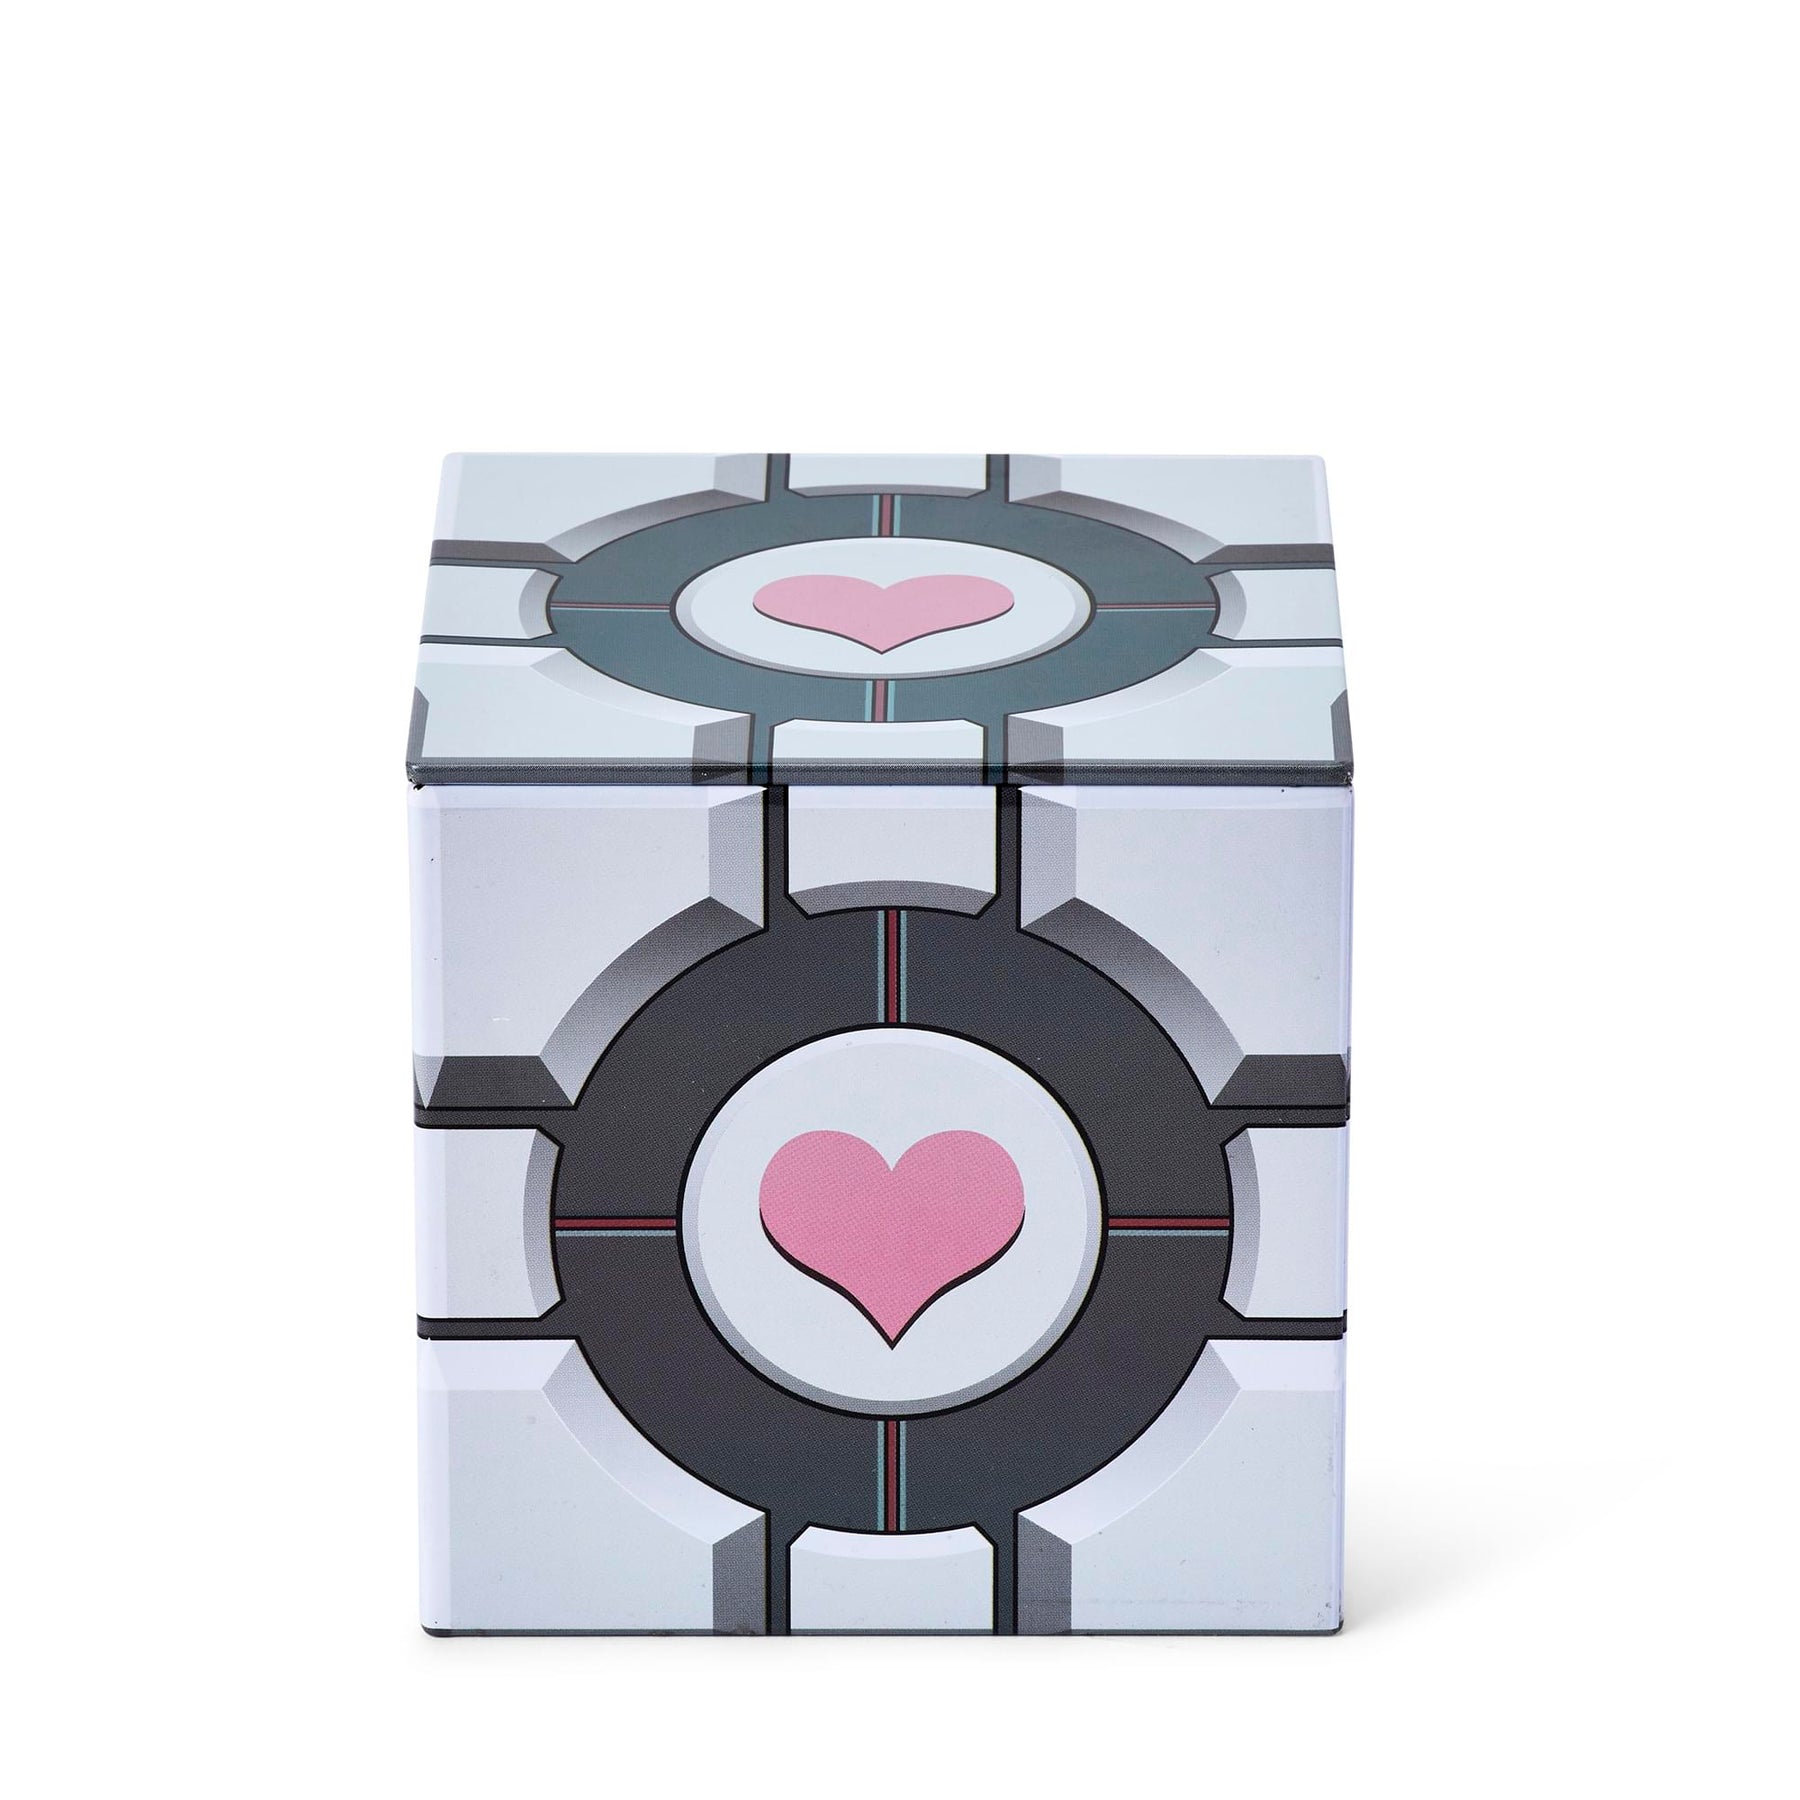 Portal Companion Cube 4 x4 Inch Tin Storage Box